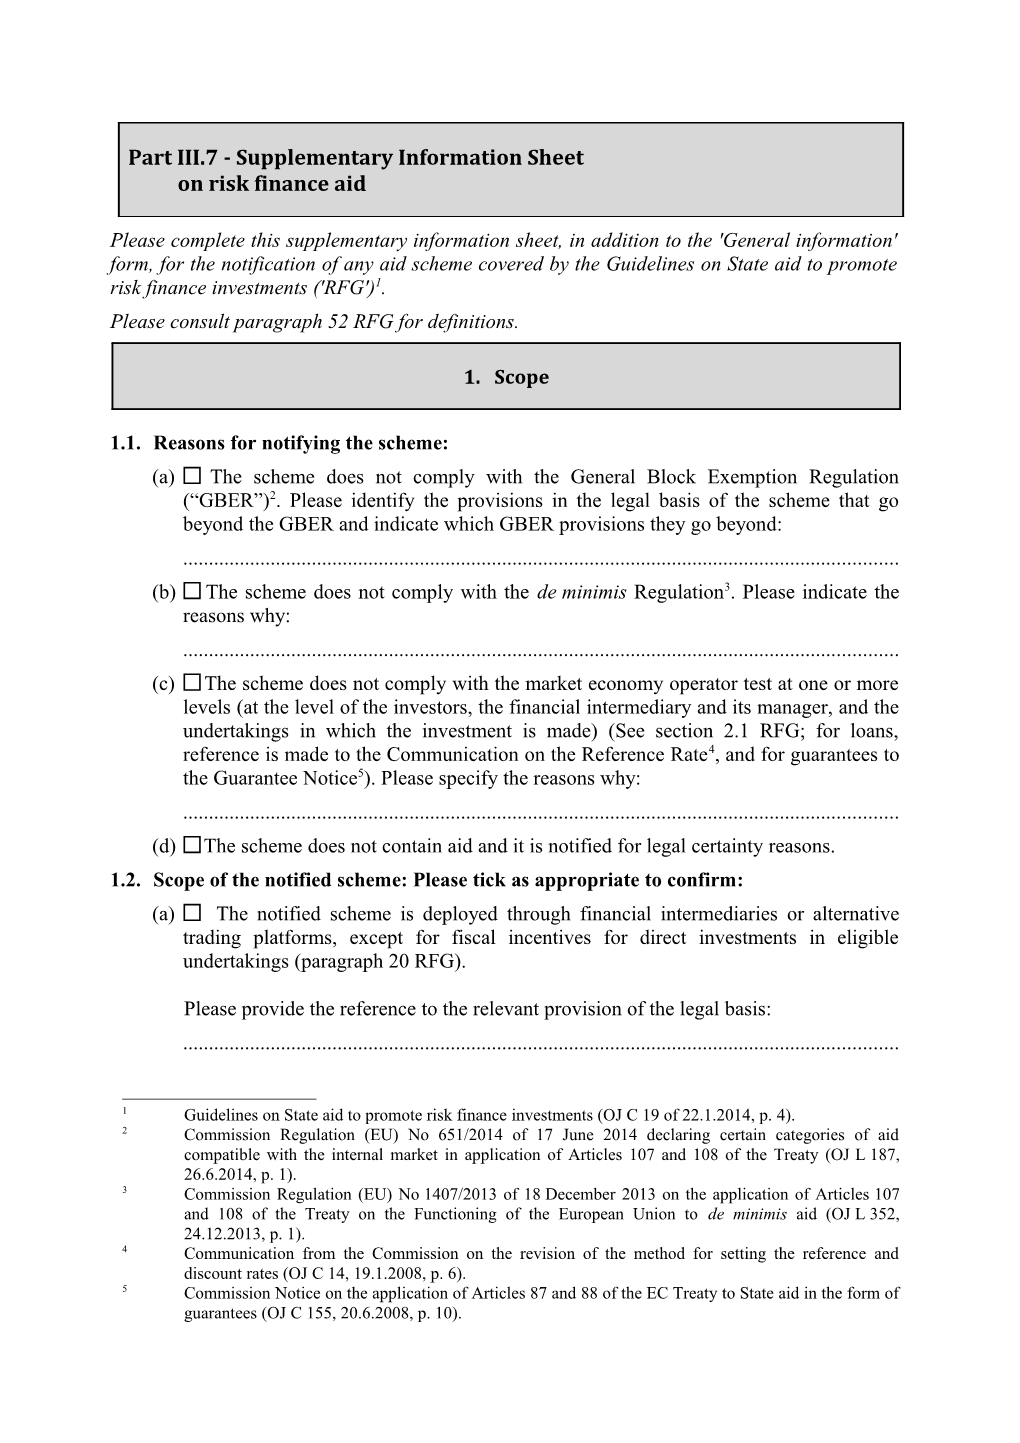 Part III.7 - Supplementary Information Sheet on Risk Finance Aid